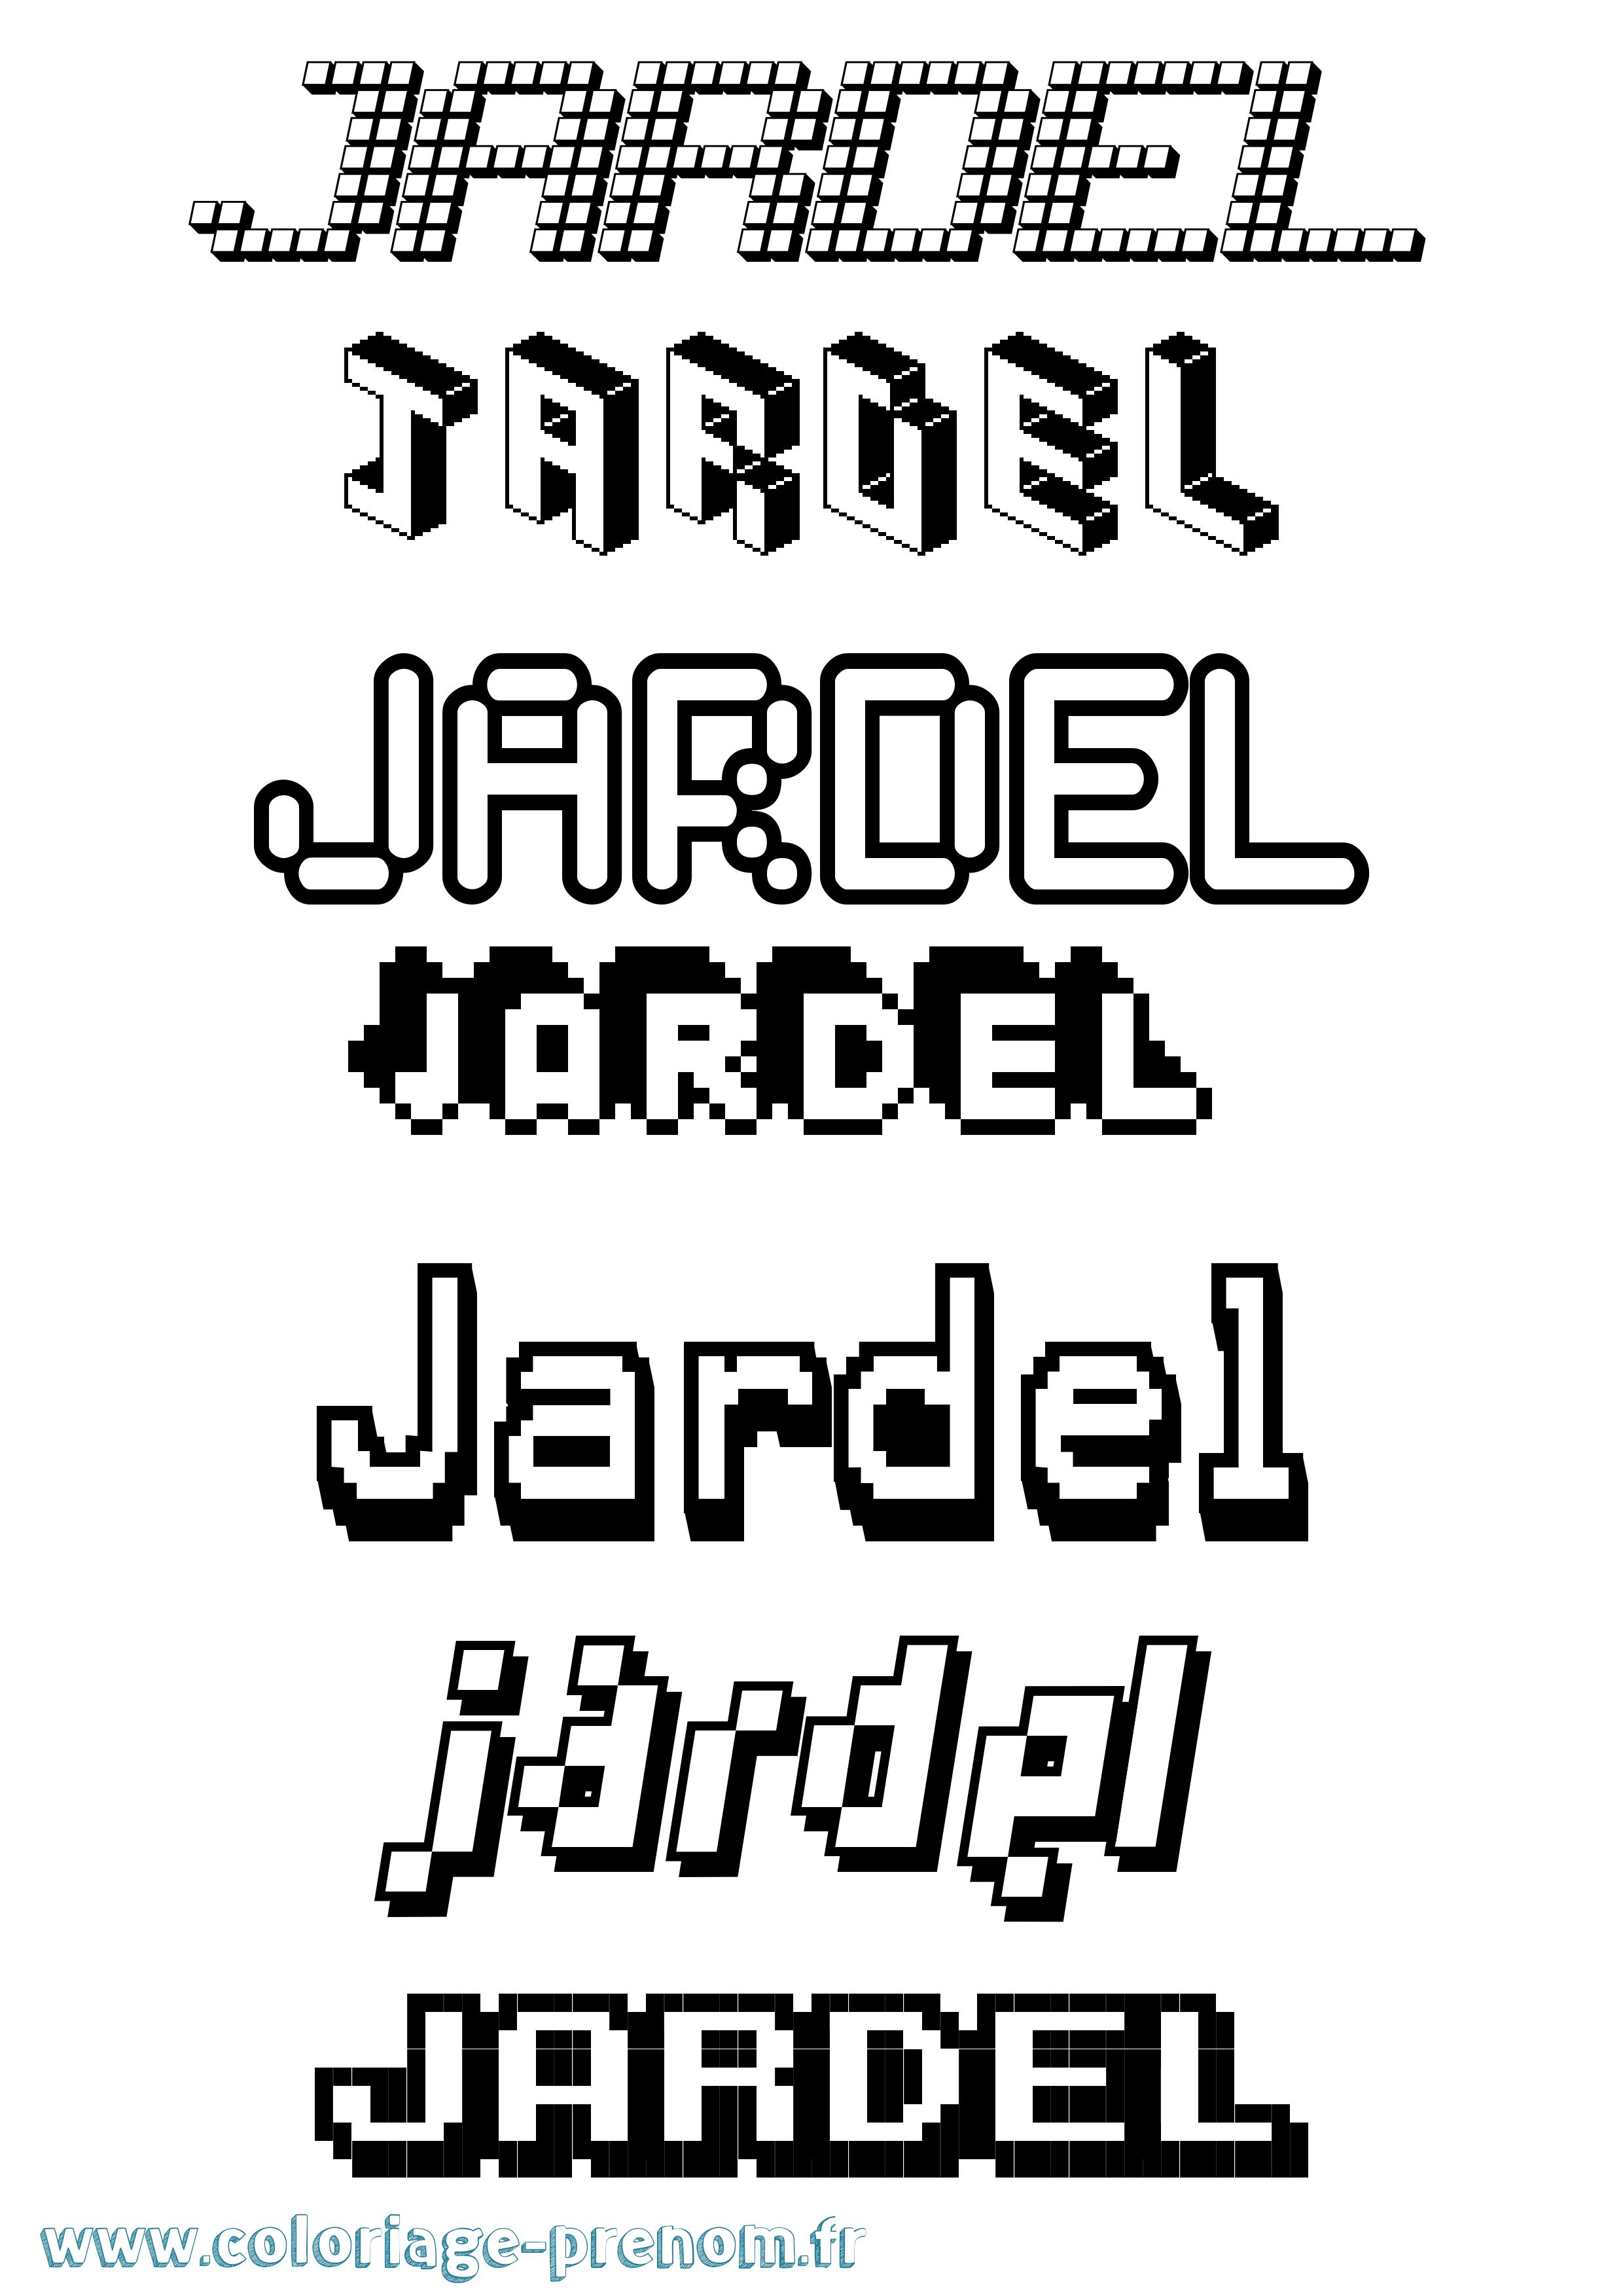 Coloriage prénom Jardel Pixel